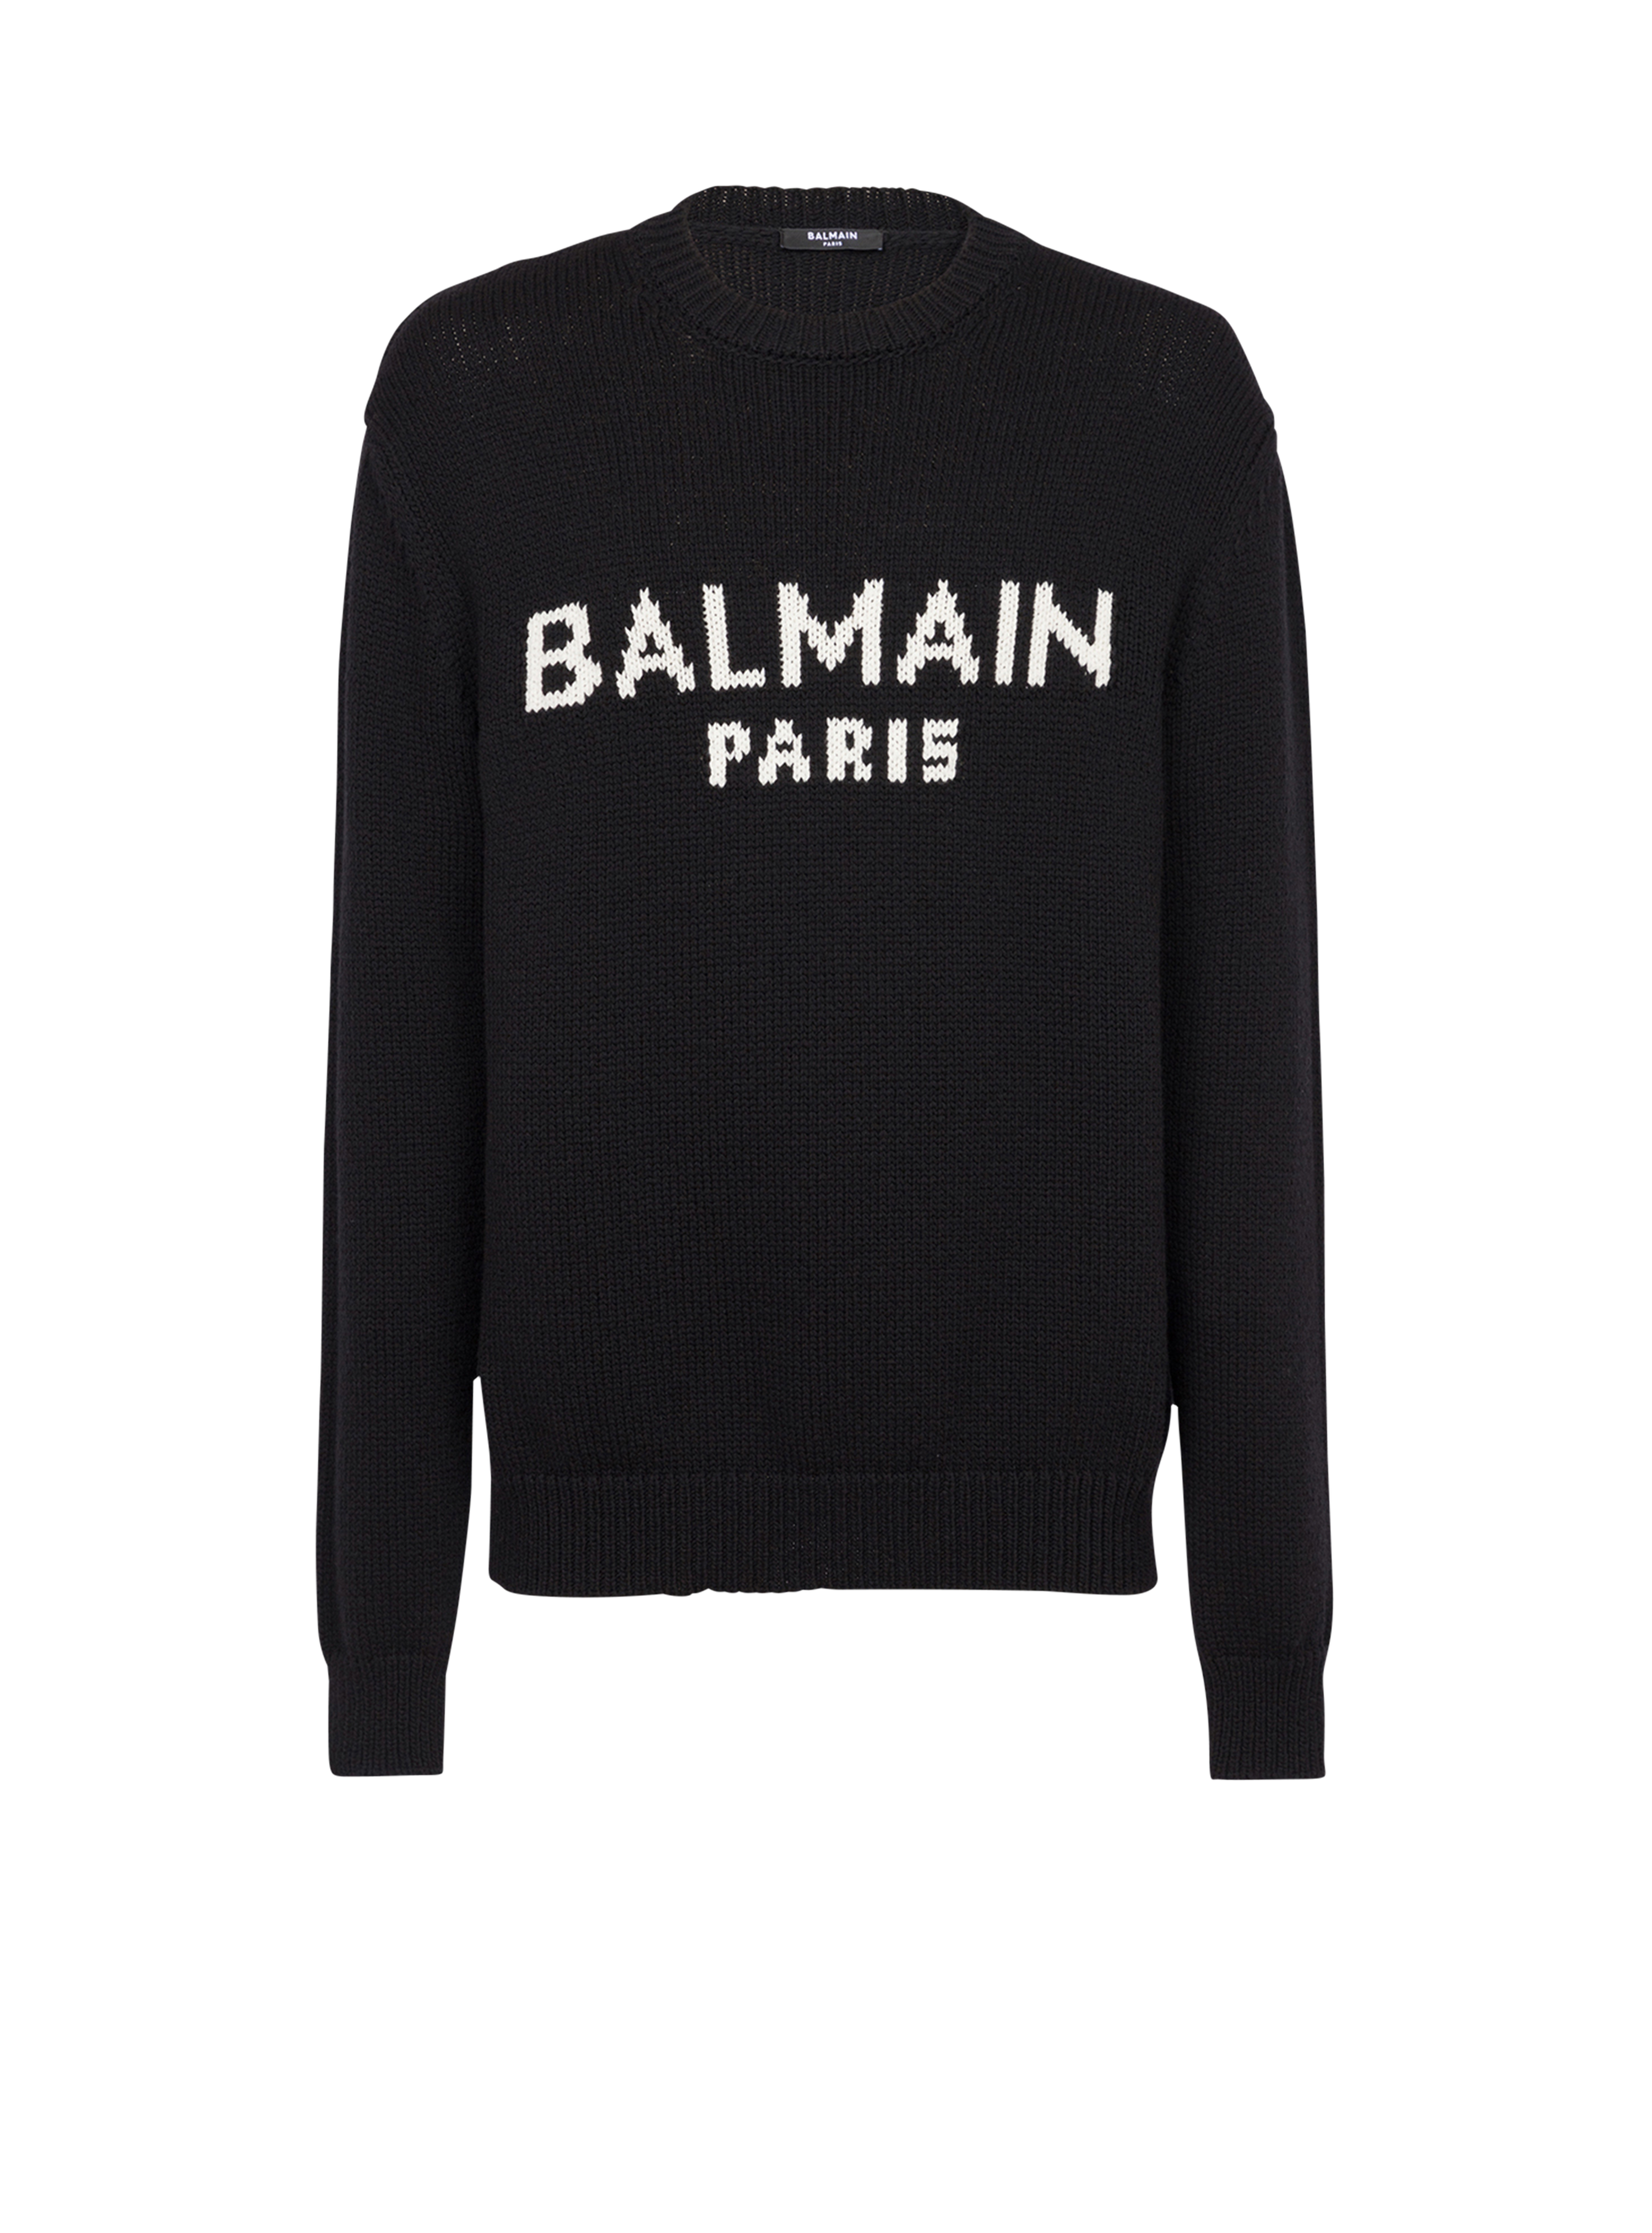 Balmain巴尔曼标志羊毛套头衫, black